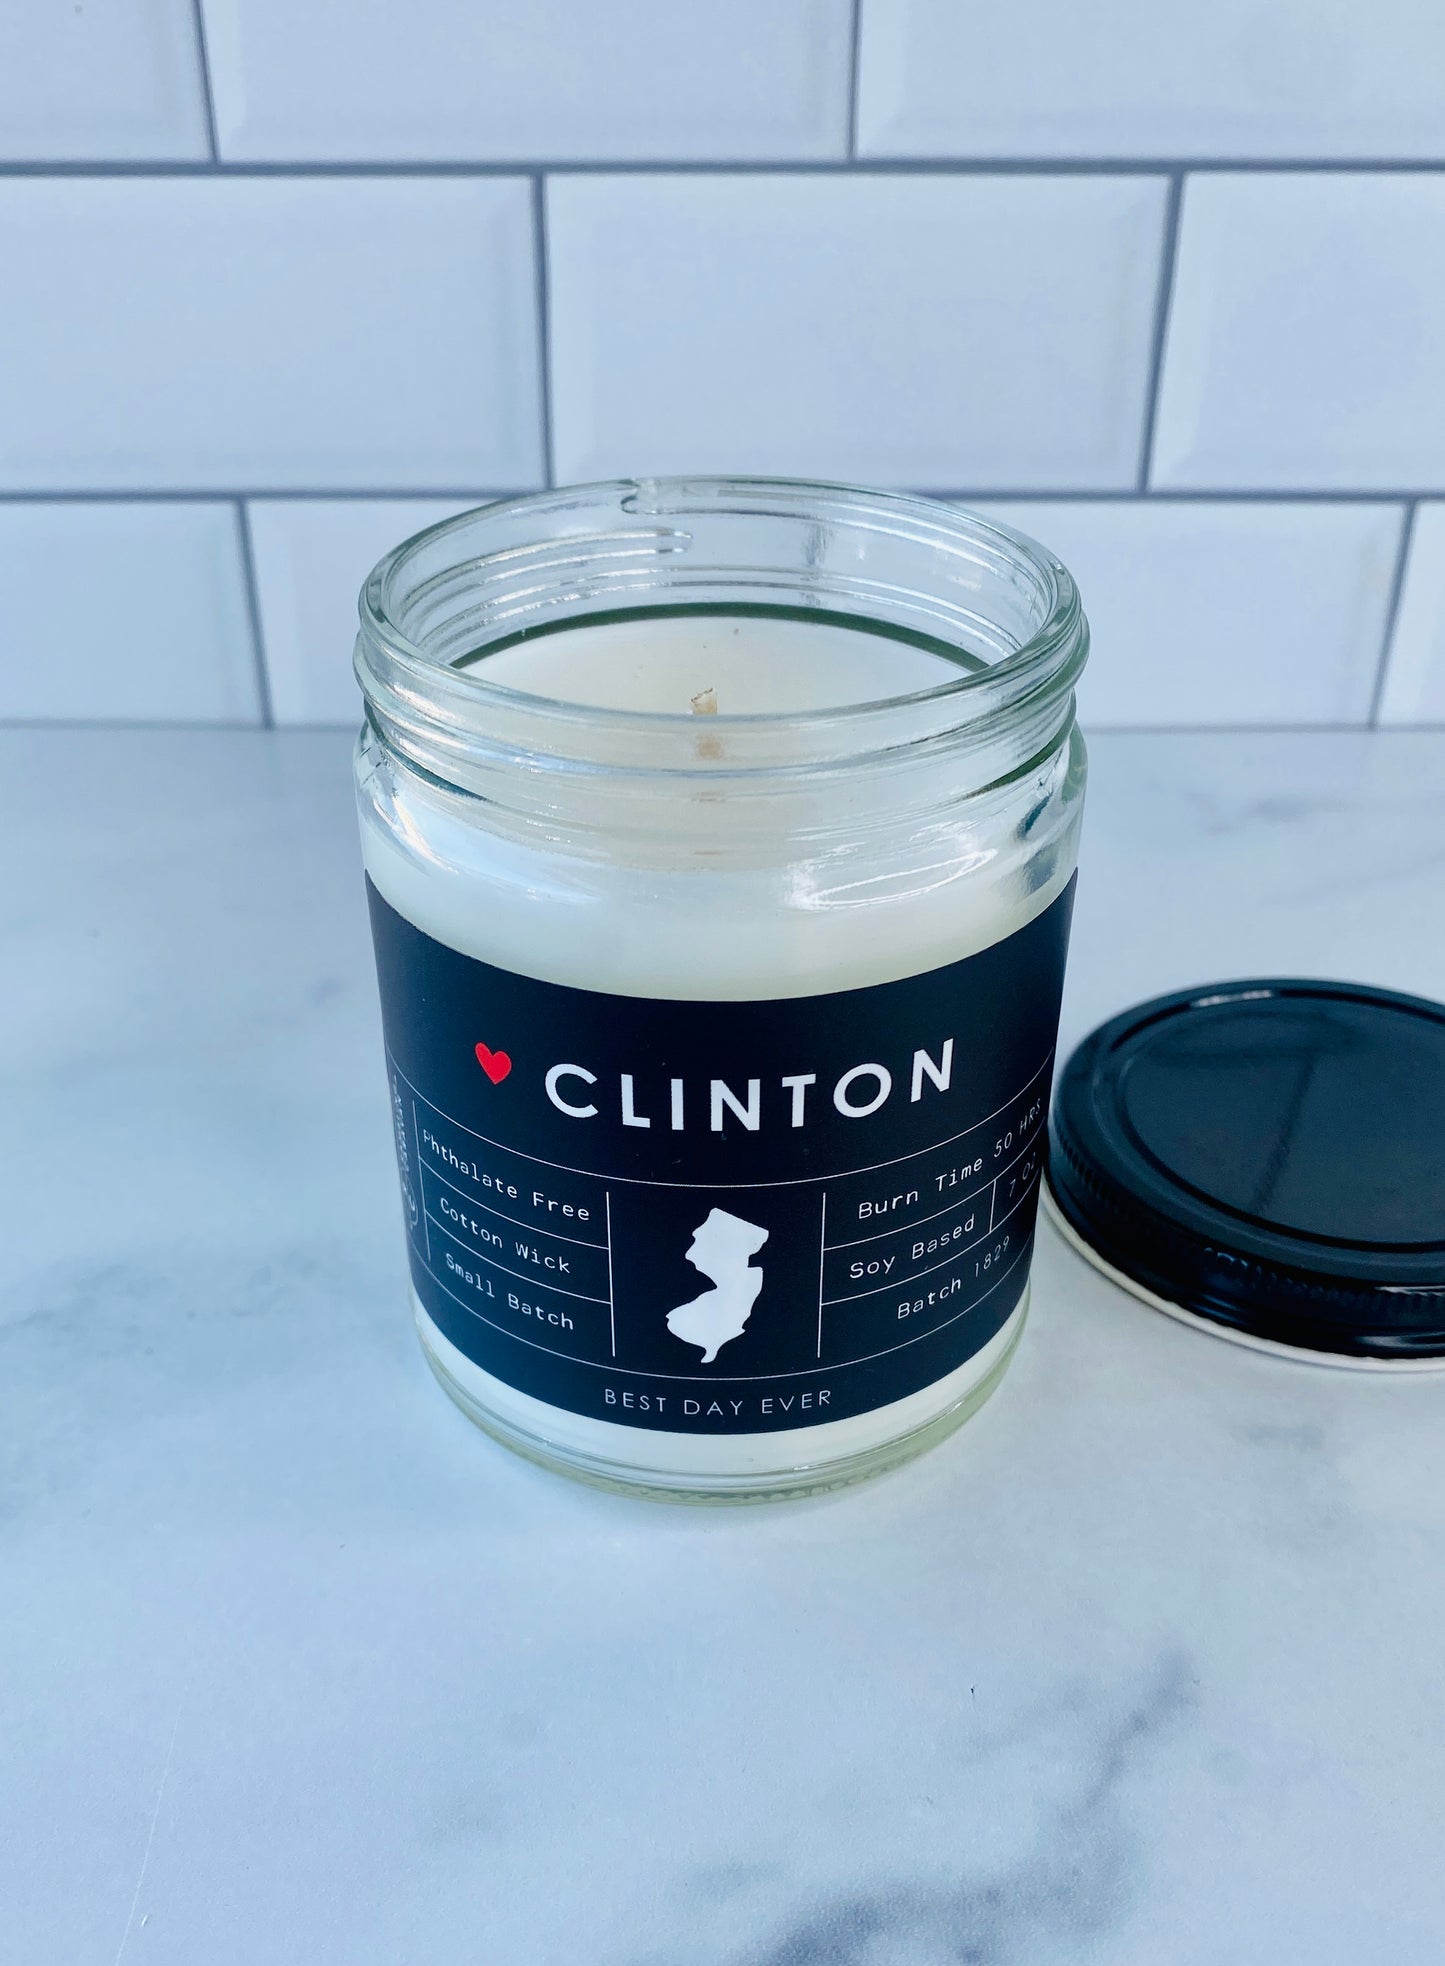 Clinton, NJ Candle